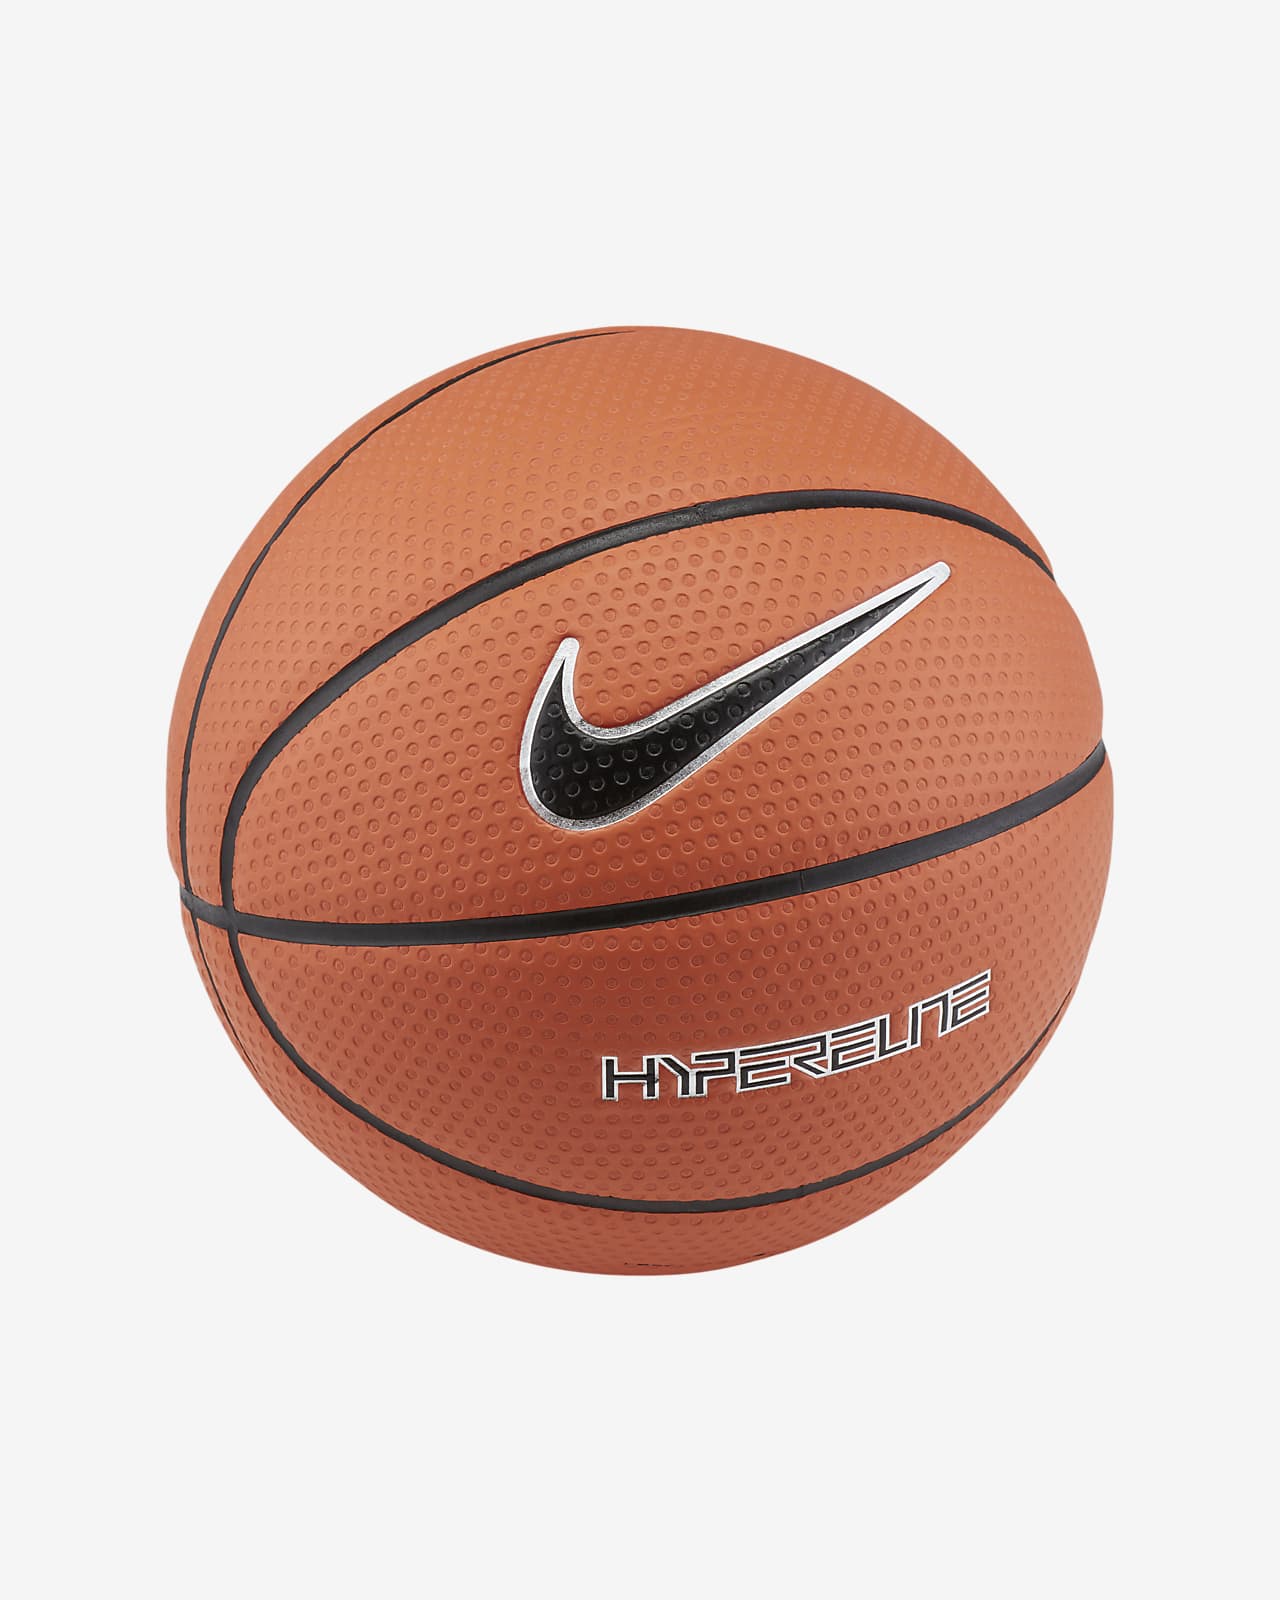 Nike Hyper Elite 8P Basketball (Size 6 